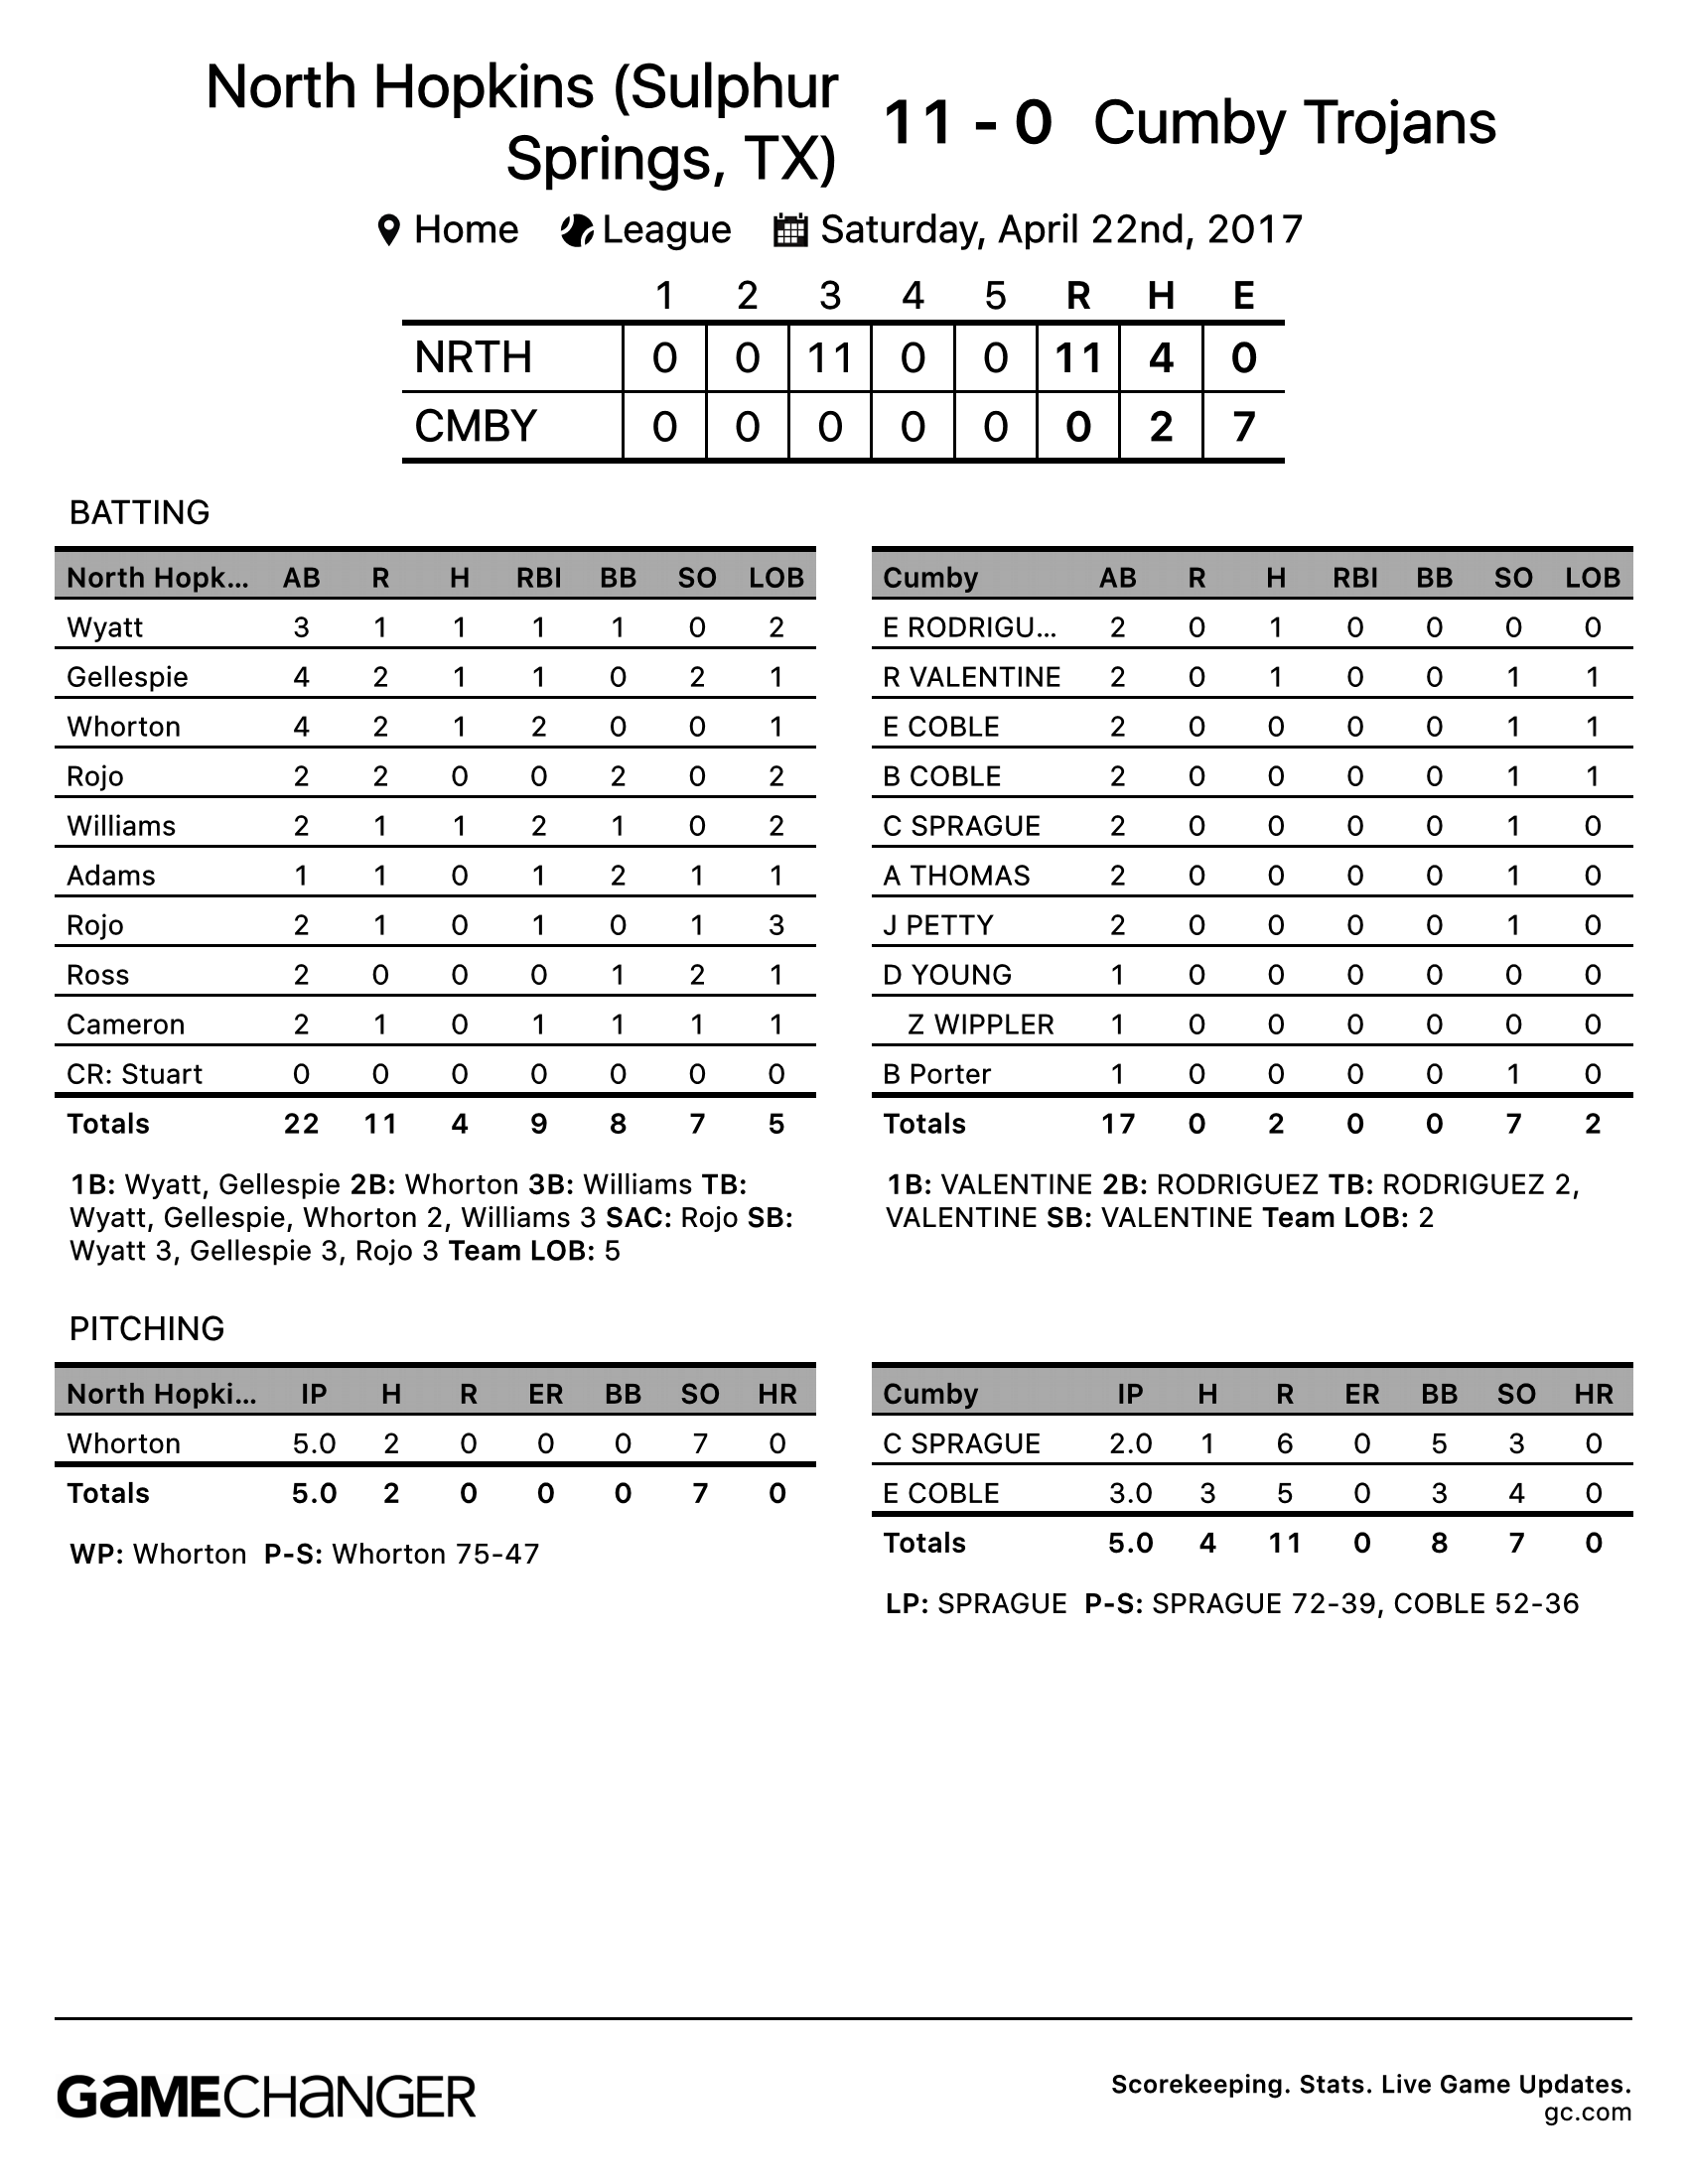 North Hopkins Baseball Defeats Cumby 11-0.(Box Score)